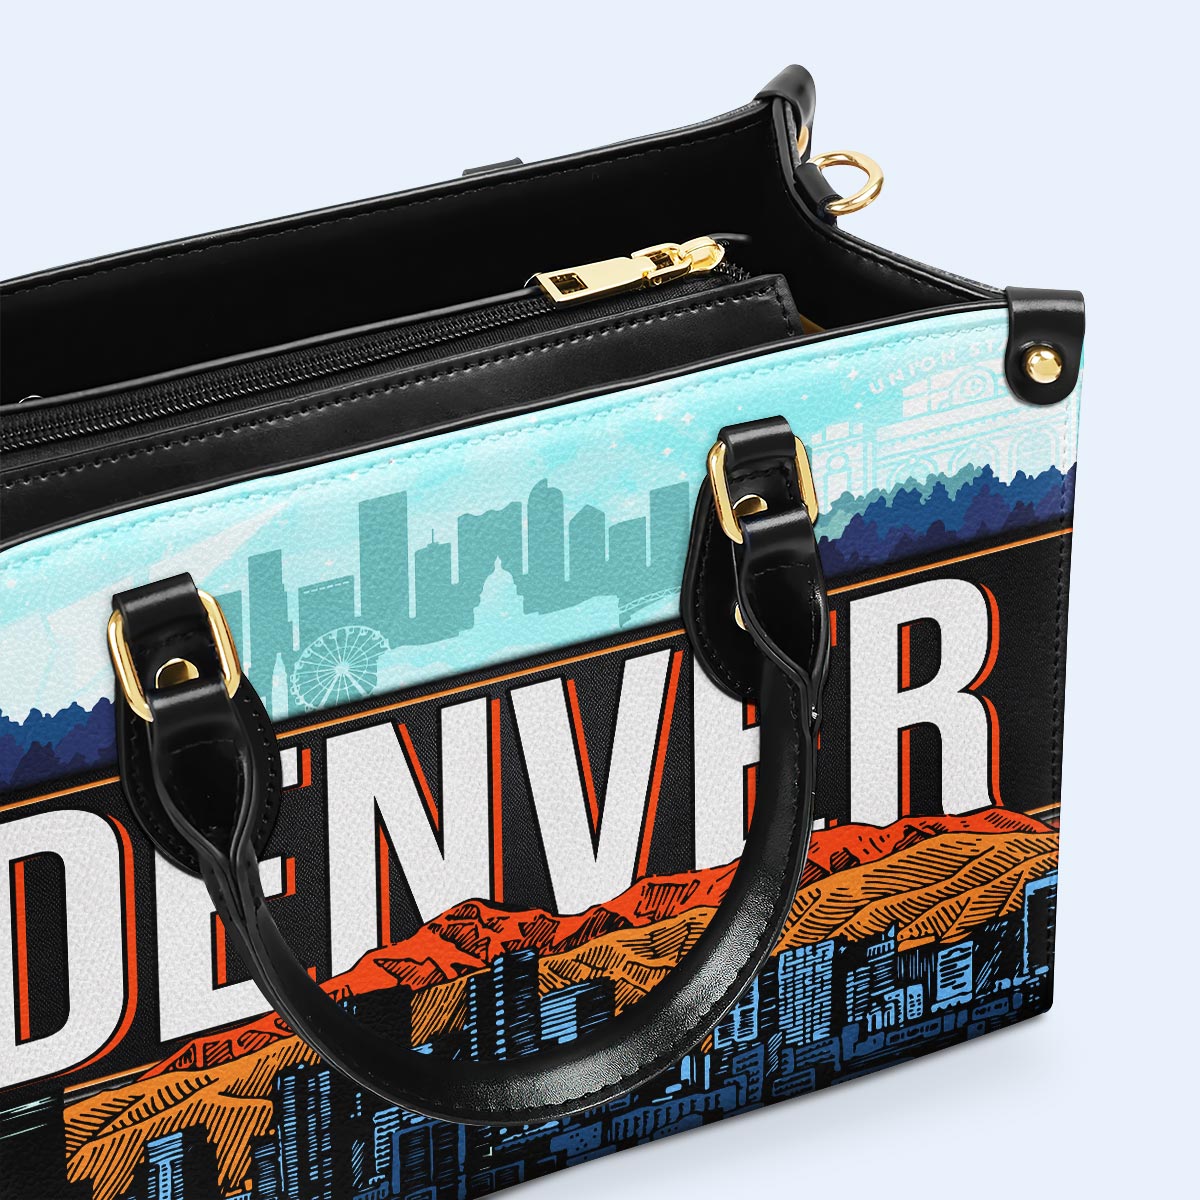 Denver - Leather Handbag - DV01